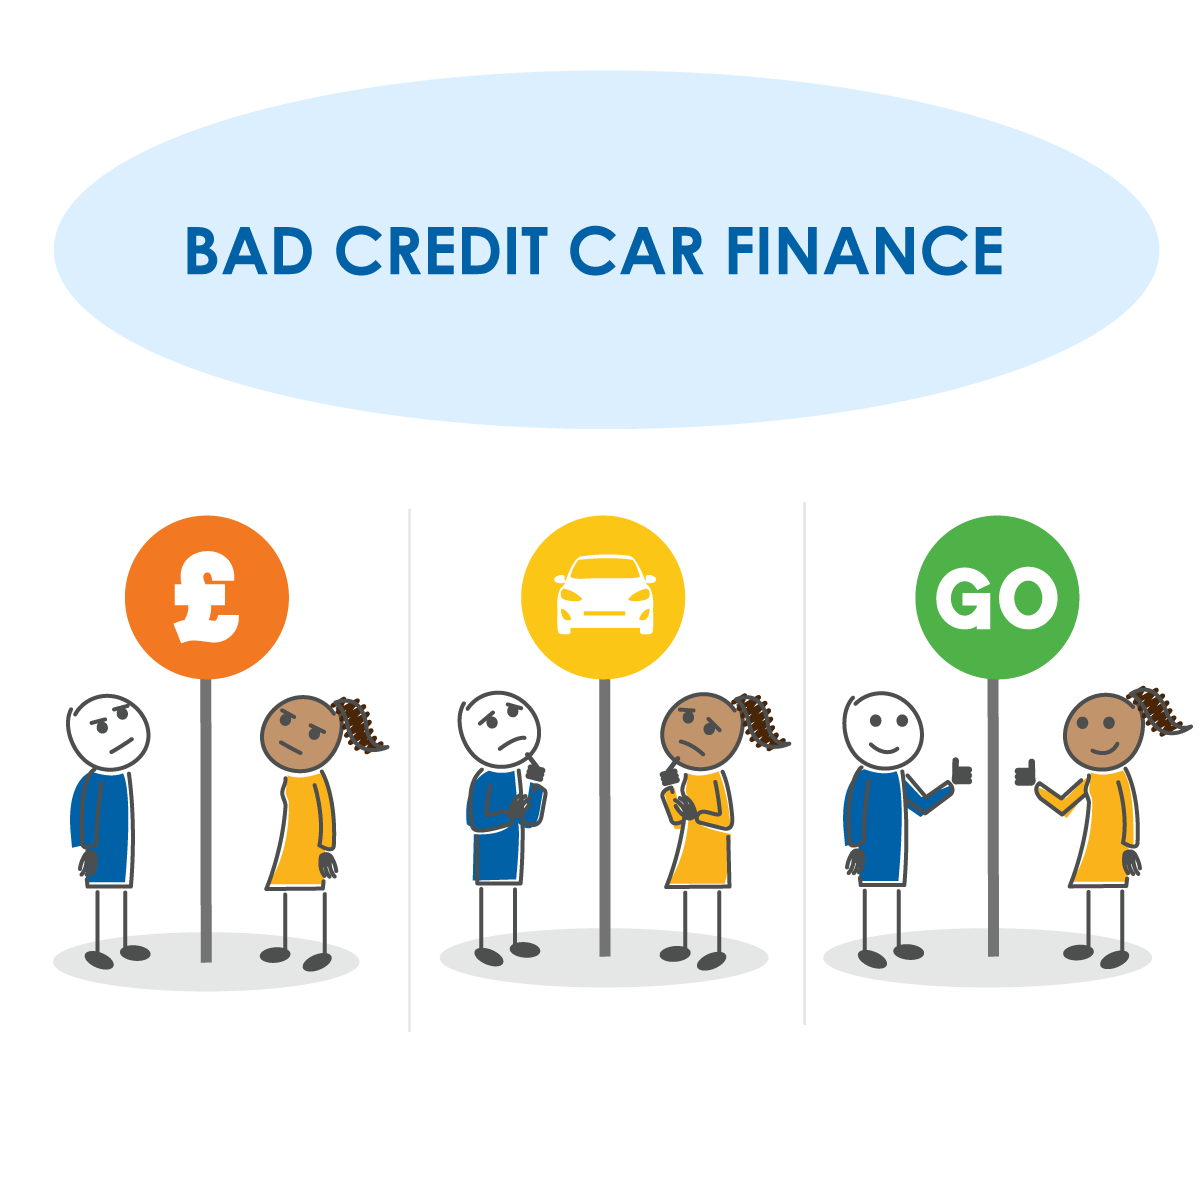 Bad Credit Car Finance | Poor Credit Car Loans | Go Car Credit